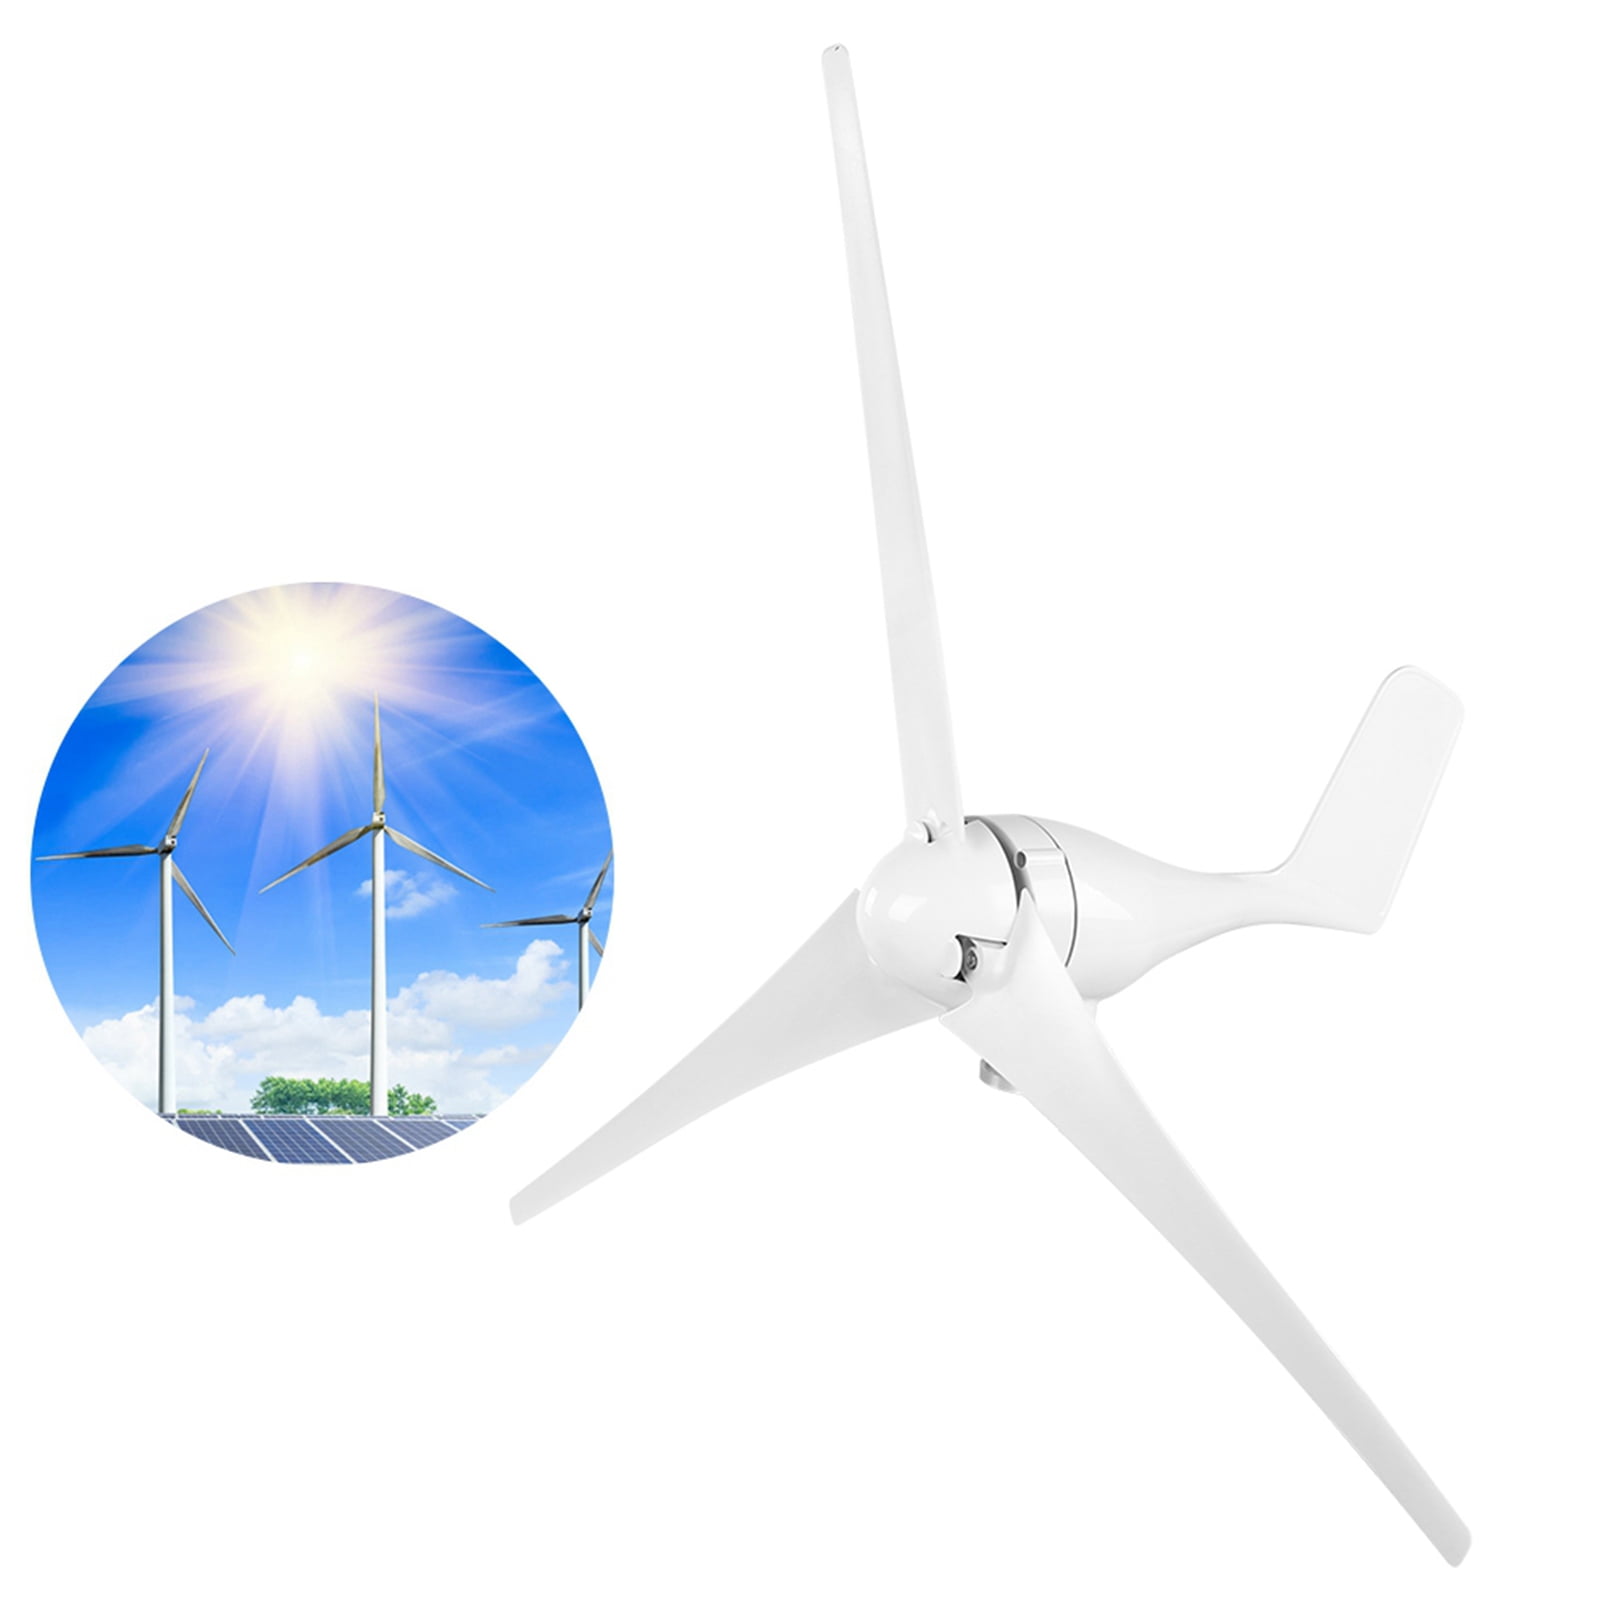 Til meditation Berri mikroskopisk Fyydes 1600W Small Wind Generator Turbines Kit 3 Blades Power Parts for  Marine Home Charging,Wind Power Parts,1600W Wind Generator - Walmart.com